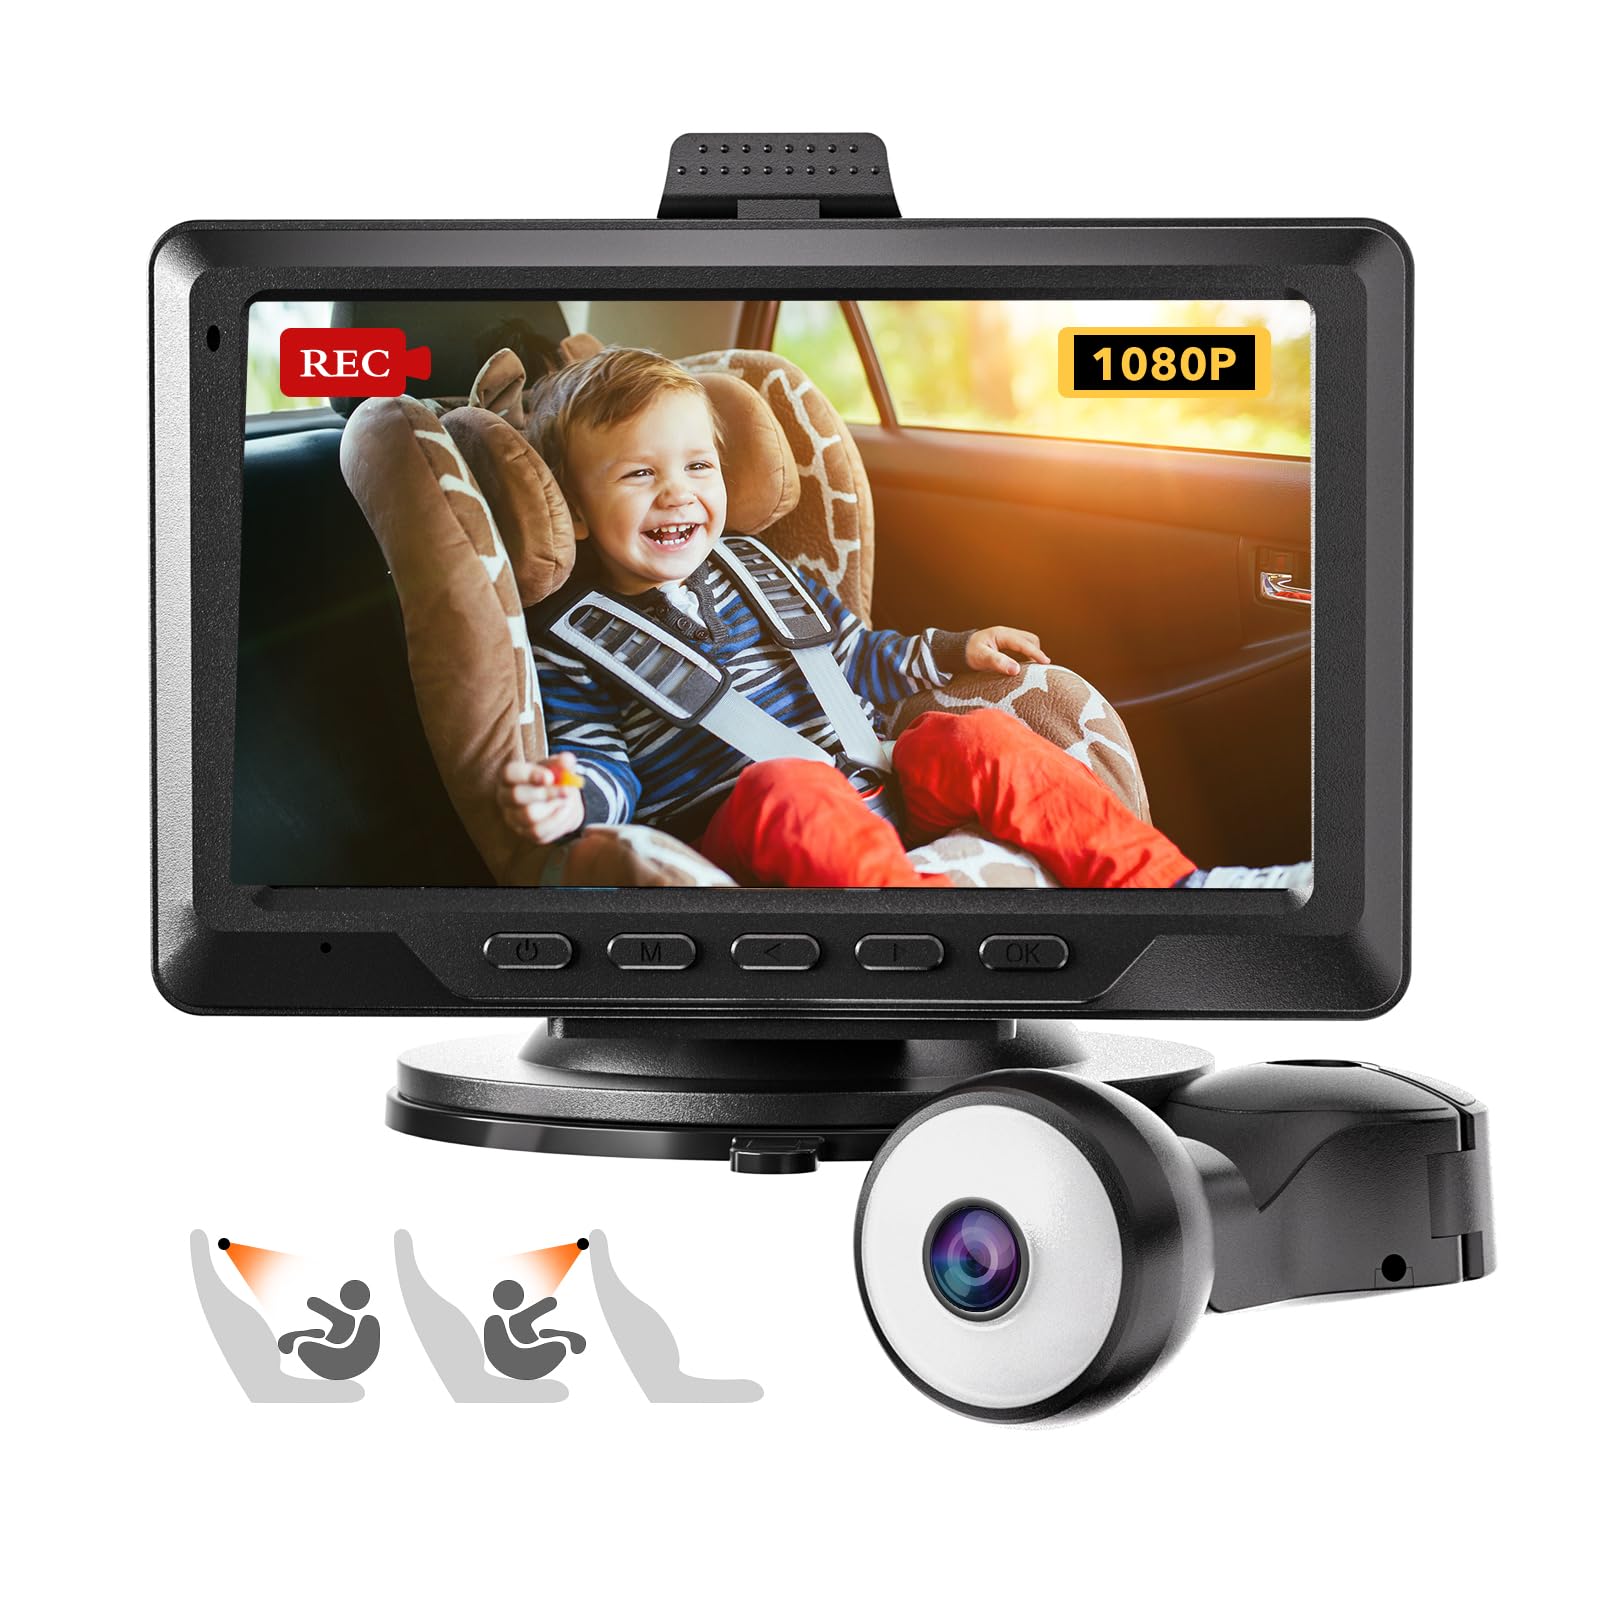 Redtiger 1080P Full-Color Night Vision Rear Facing Baby Monitor Hot Sales REDTIGER Dash Cam   